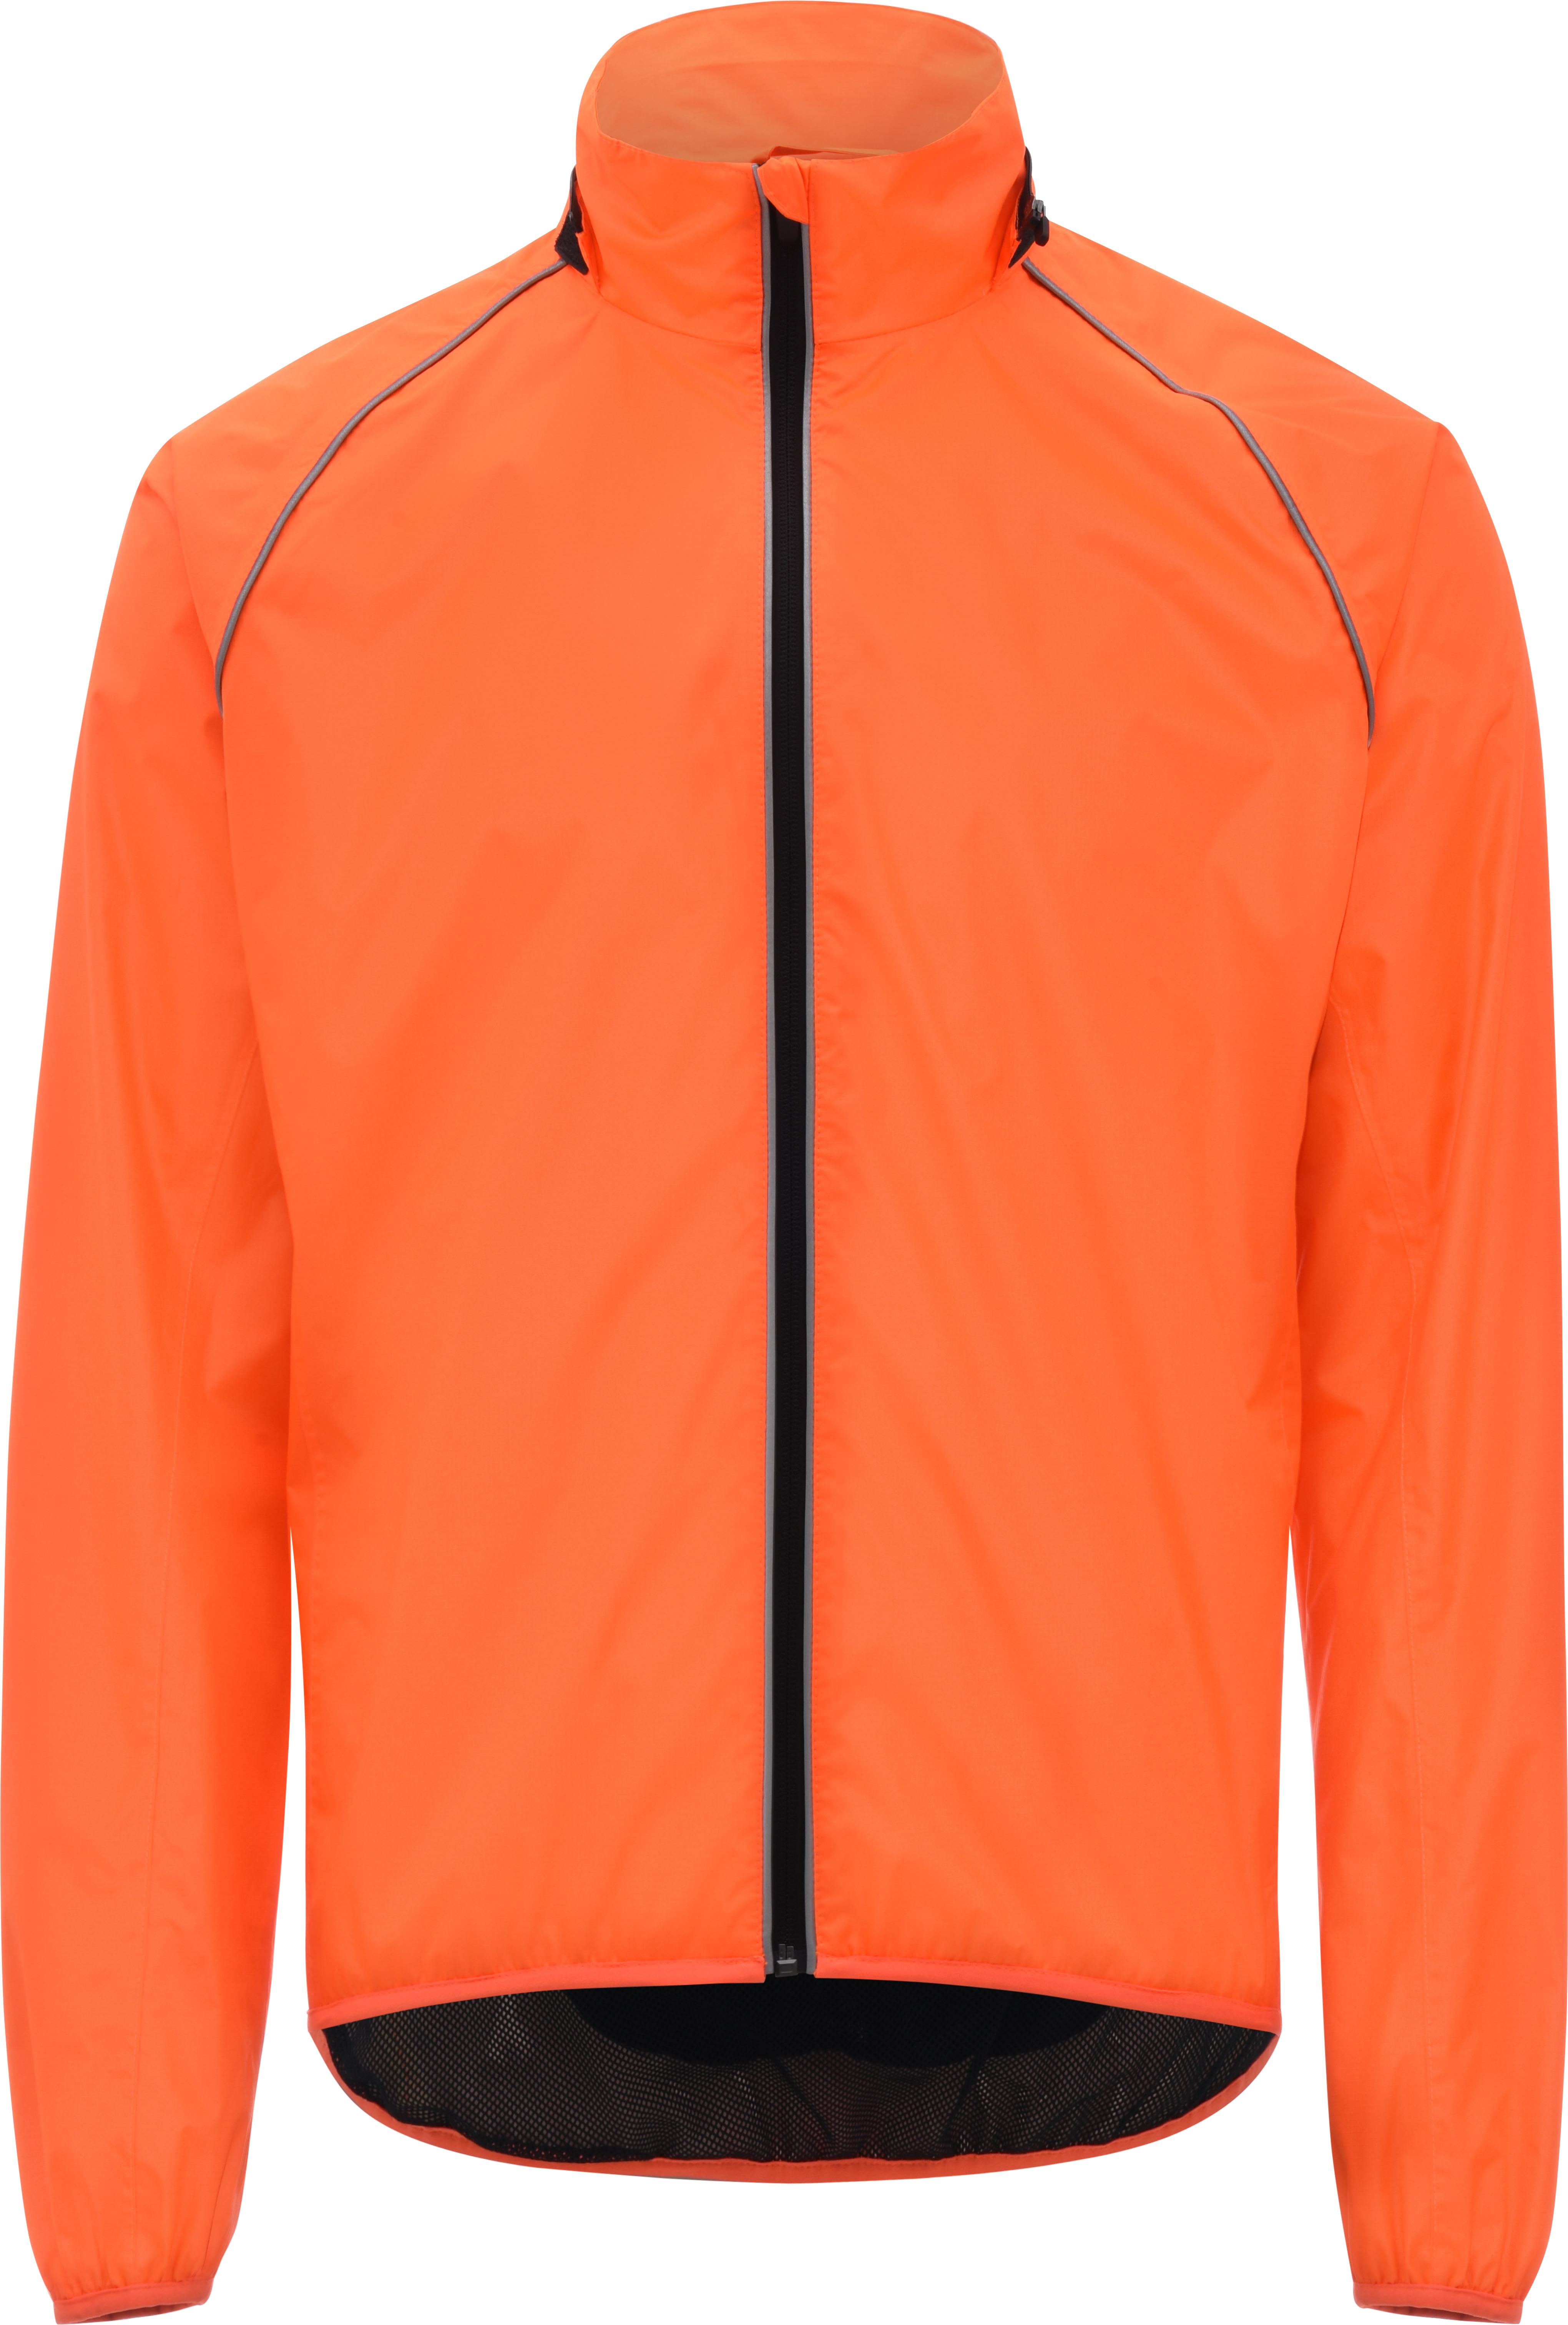 Ridge Unisex Waterproof Jacket - Fluorescent Orange, Xxl